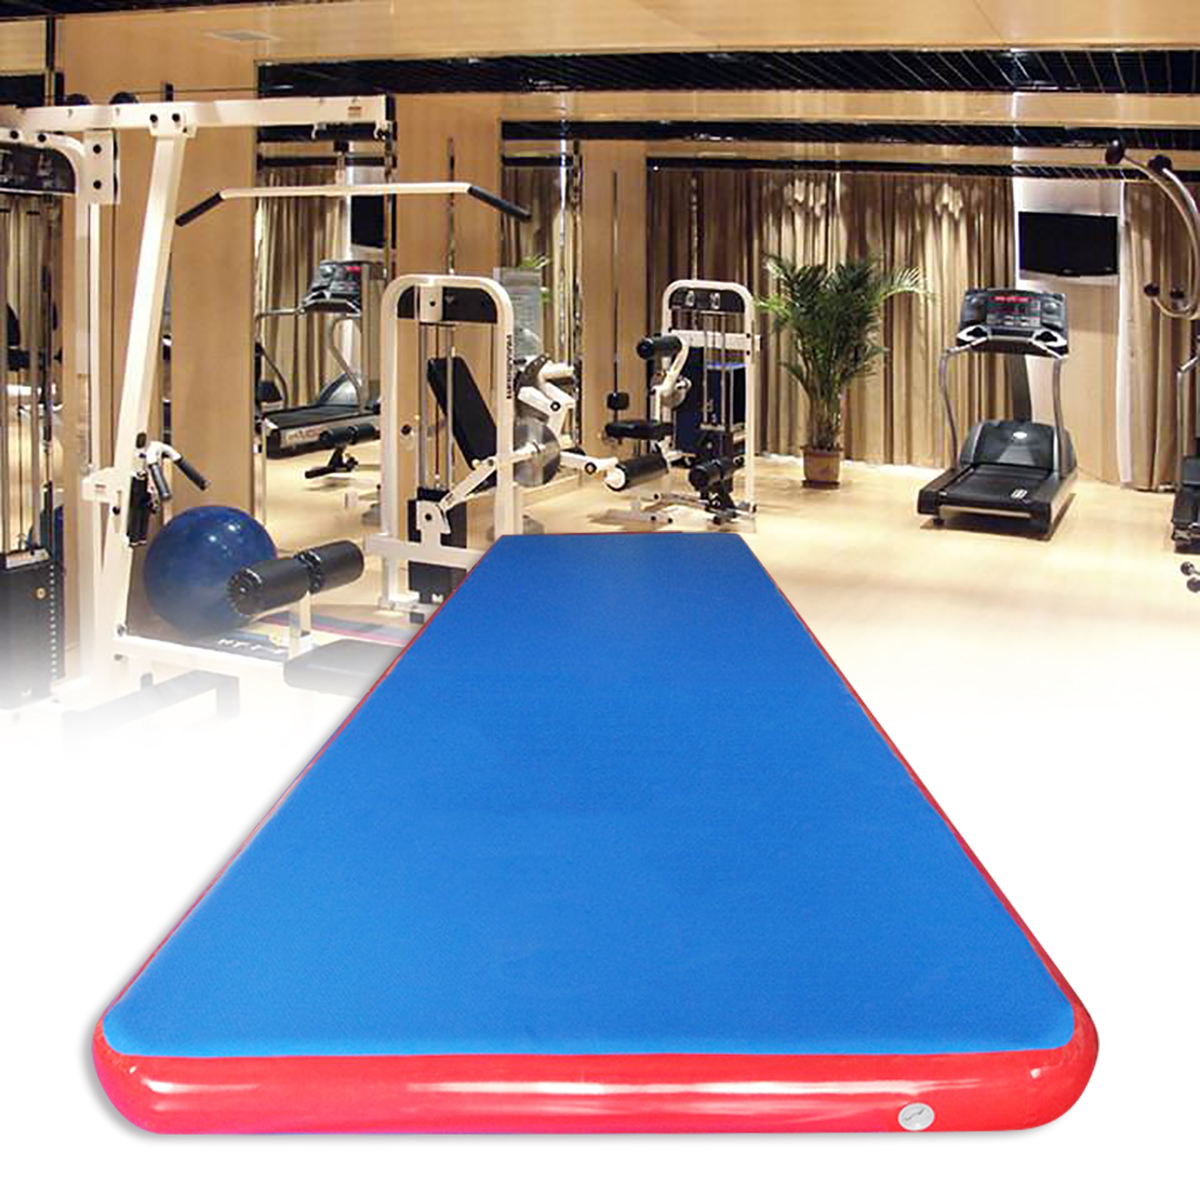 275.6x78.7x7.8 inch Inflatable Air Track Floor Home Tumbling Mat Gymnastics Training Track Pad